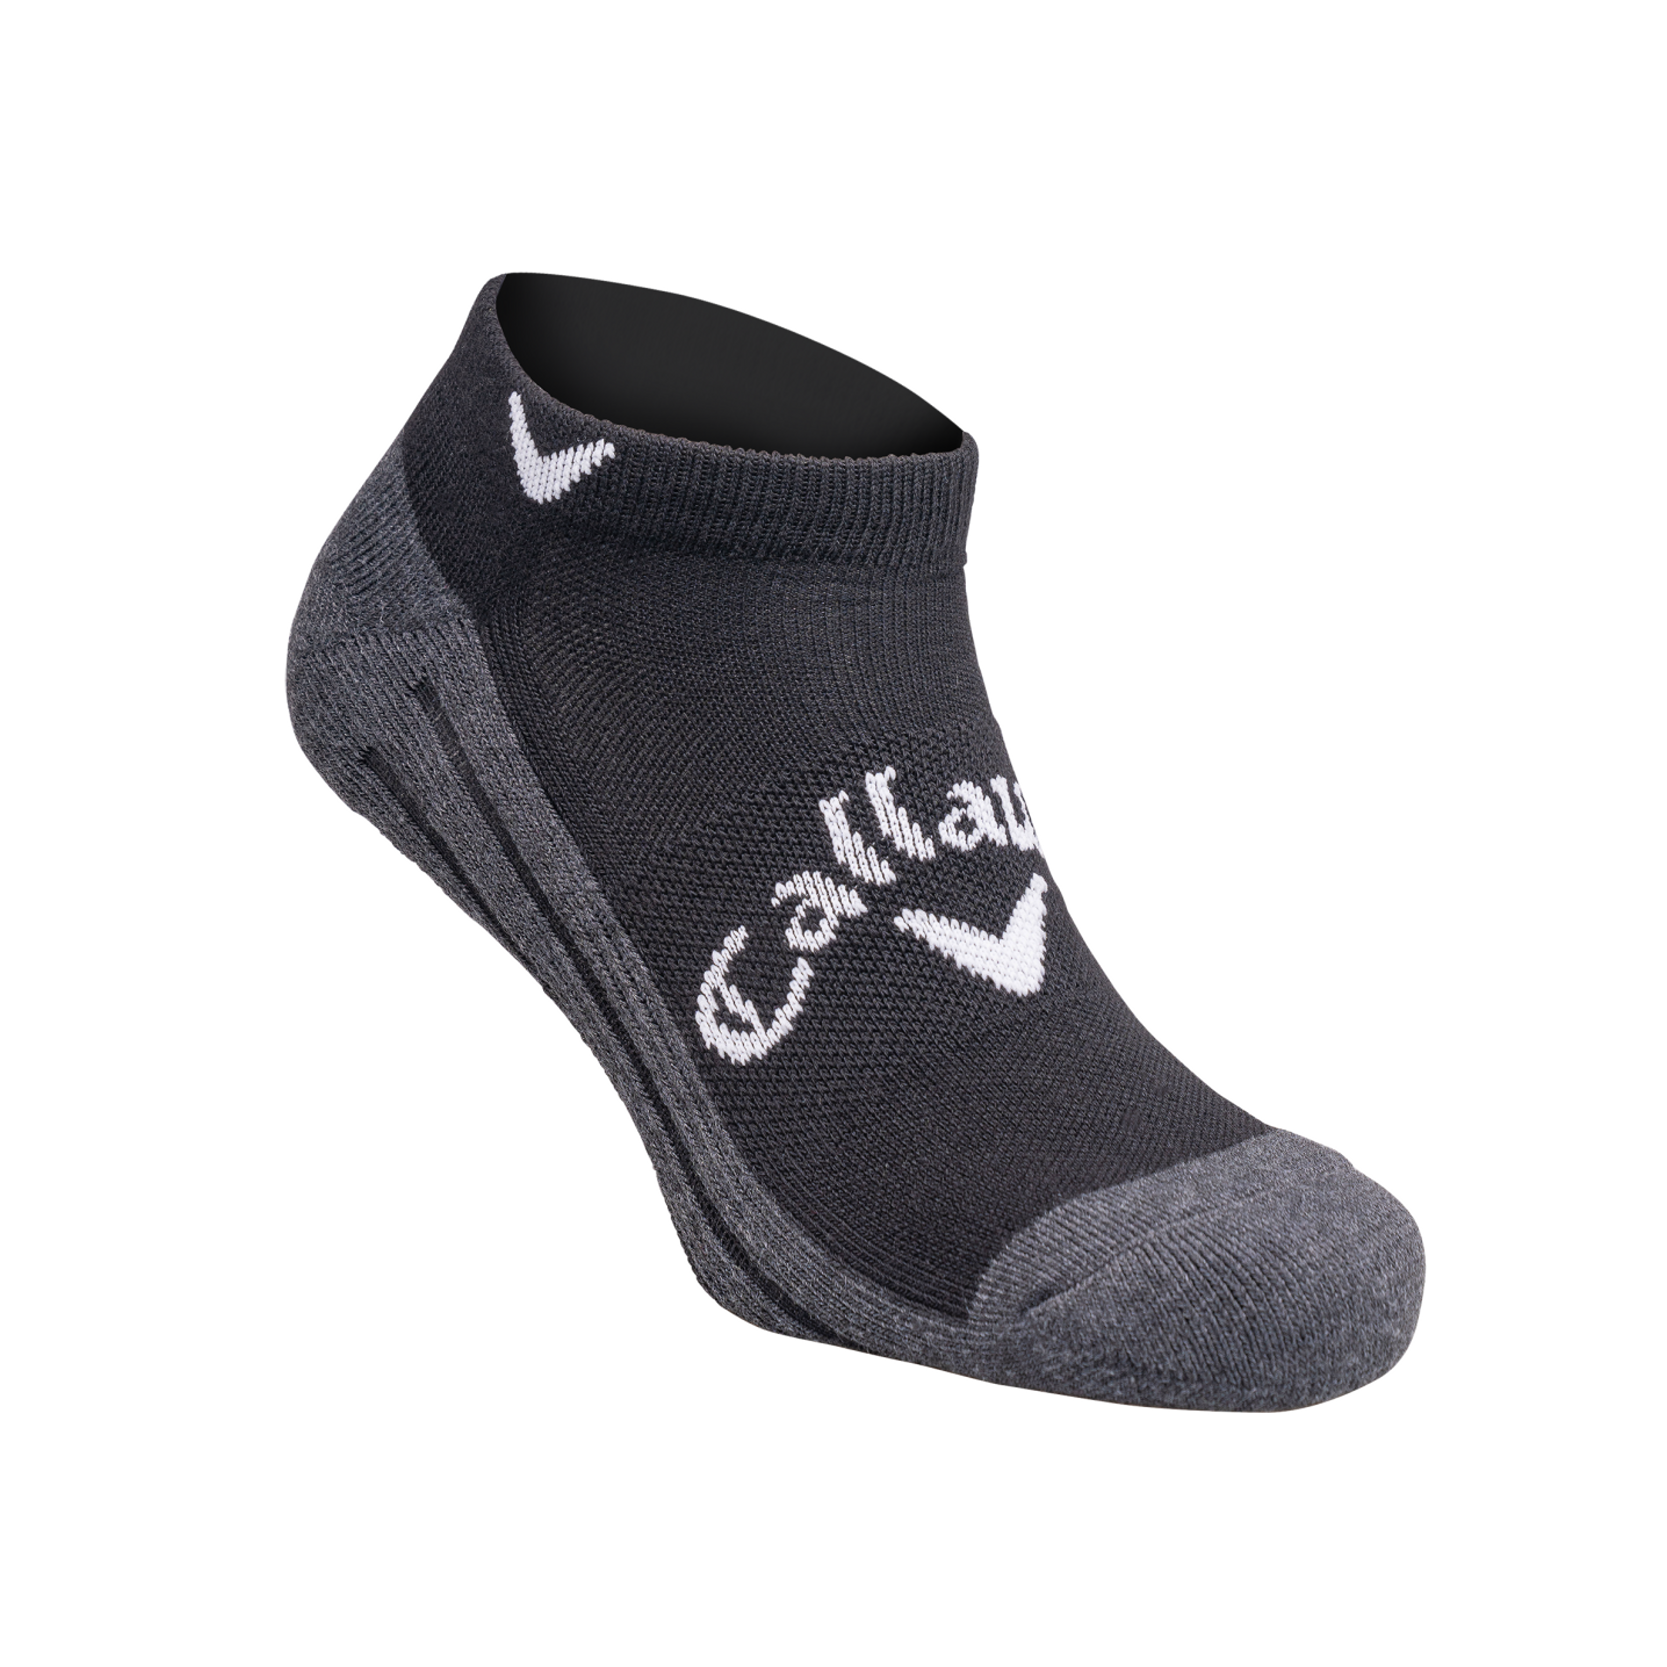 Callaway Tour Opti-Dri Low II pánské golfové ponožky, černé, vel. S/M